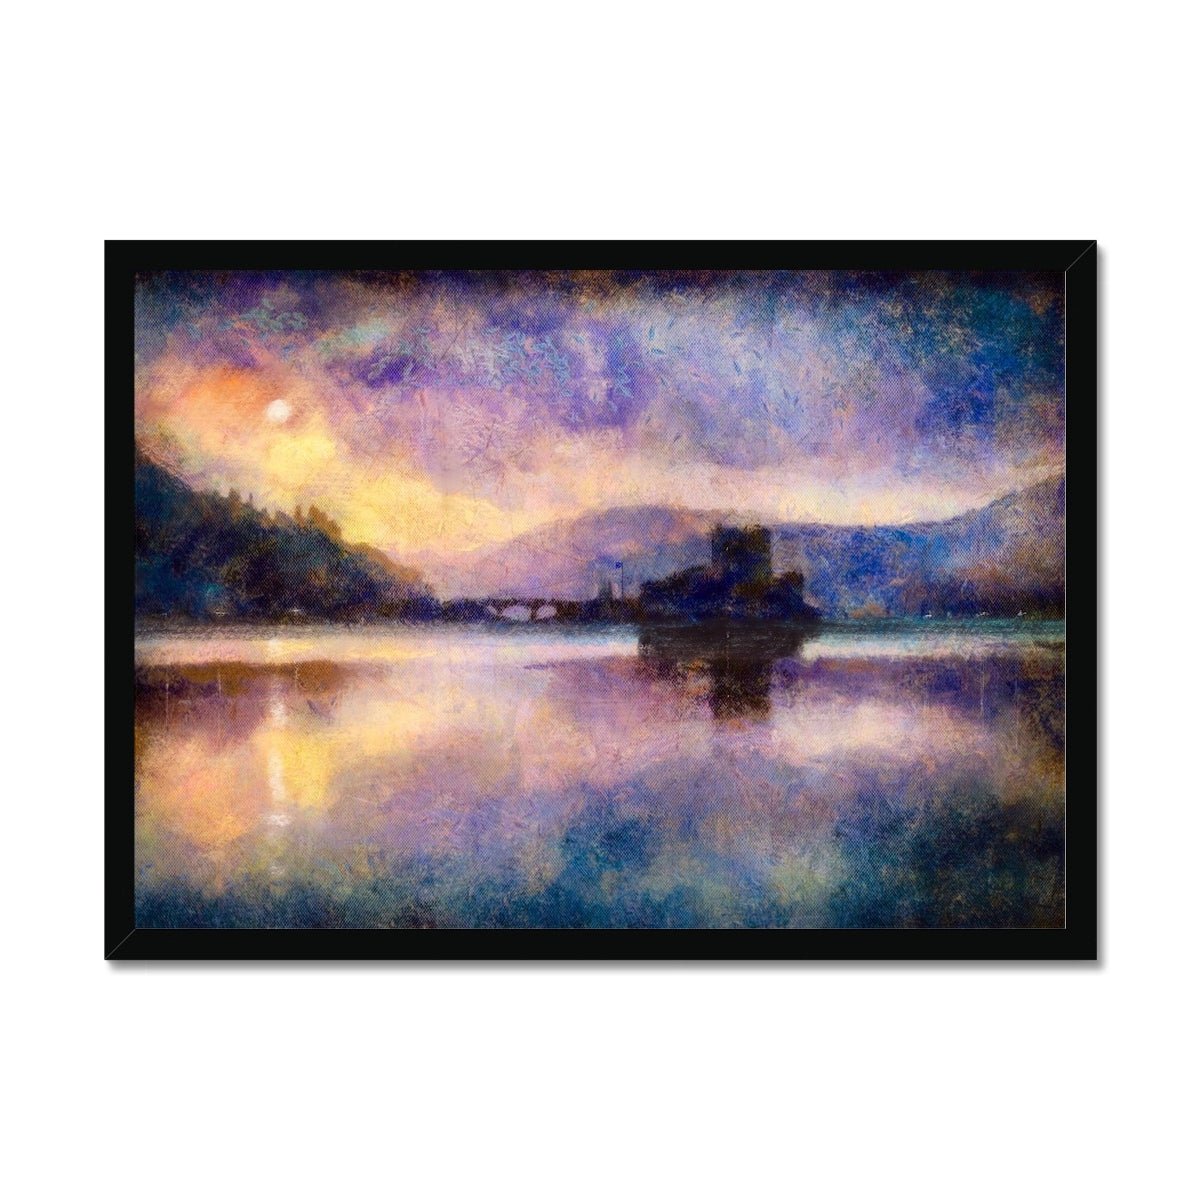 Eilean Donan Castle Moonlight Painting | Framed Prints From Scotland-Framed Prints-Scottish Castles Art Gallery-A2 Landscape-Black Frame-Paintings, Prints, Homeware, Art Gifts From Scotland By Scottish Artist Kevin Hunter